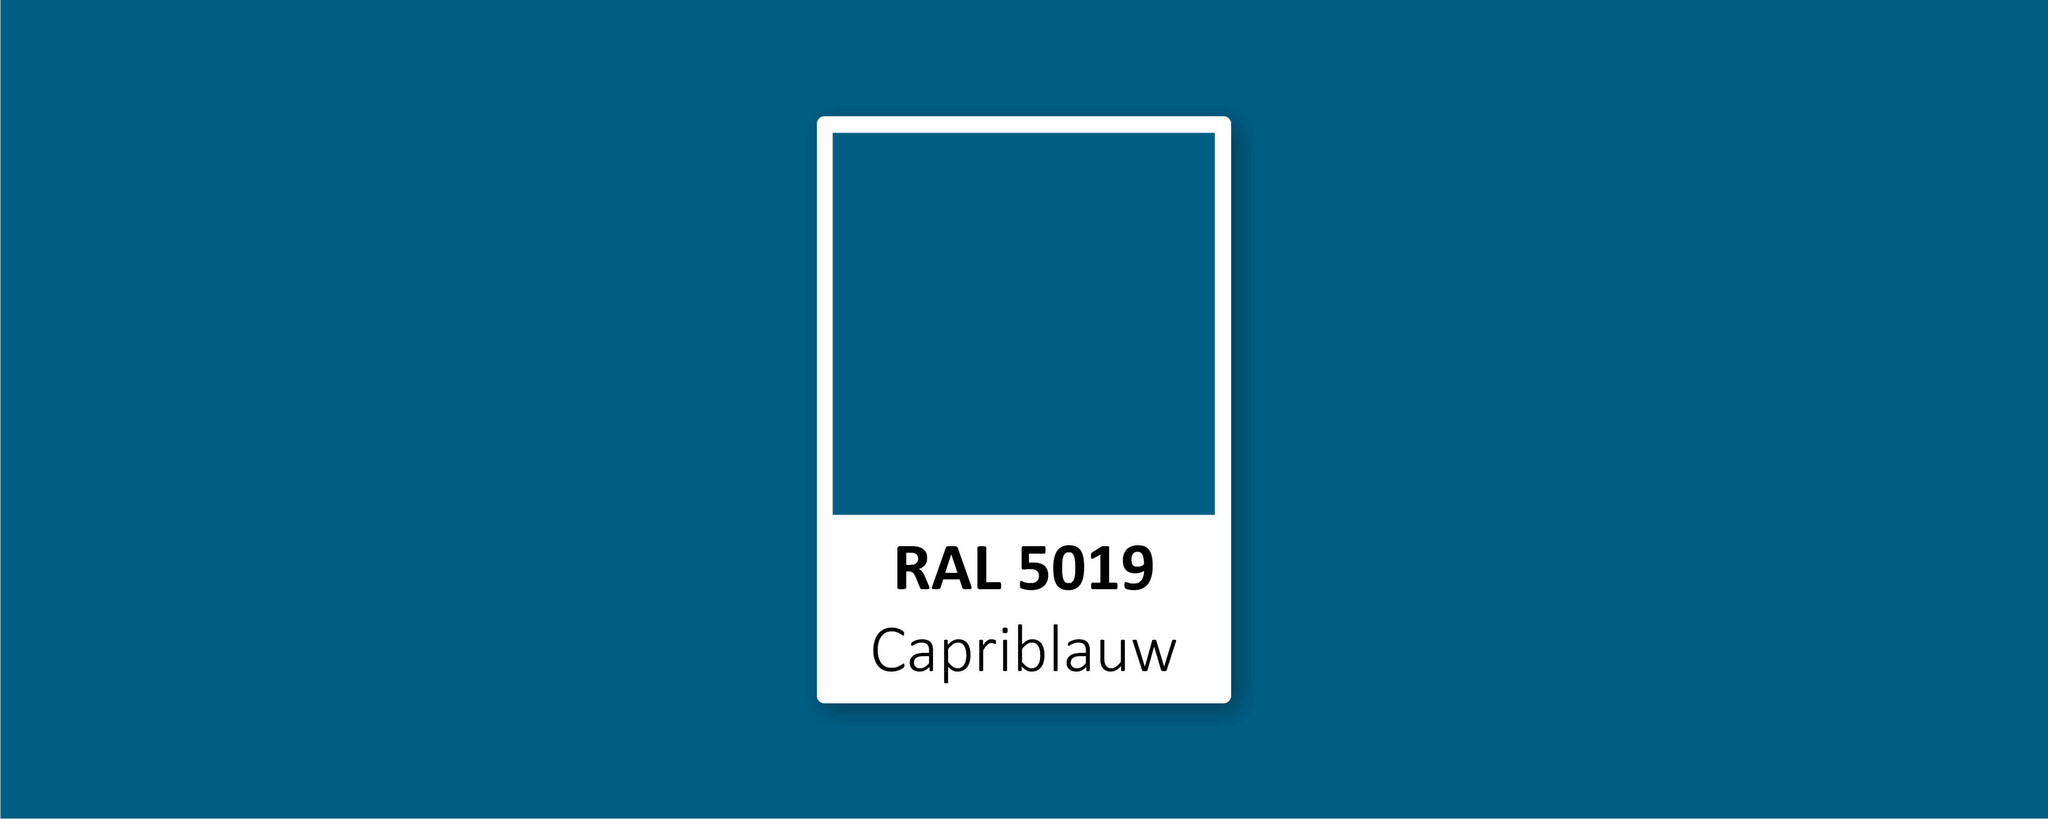 RAL 5019: Capriblauw - De Verfzaak